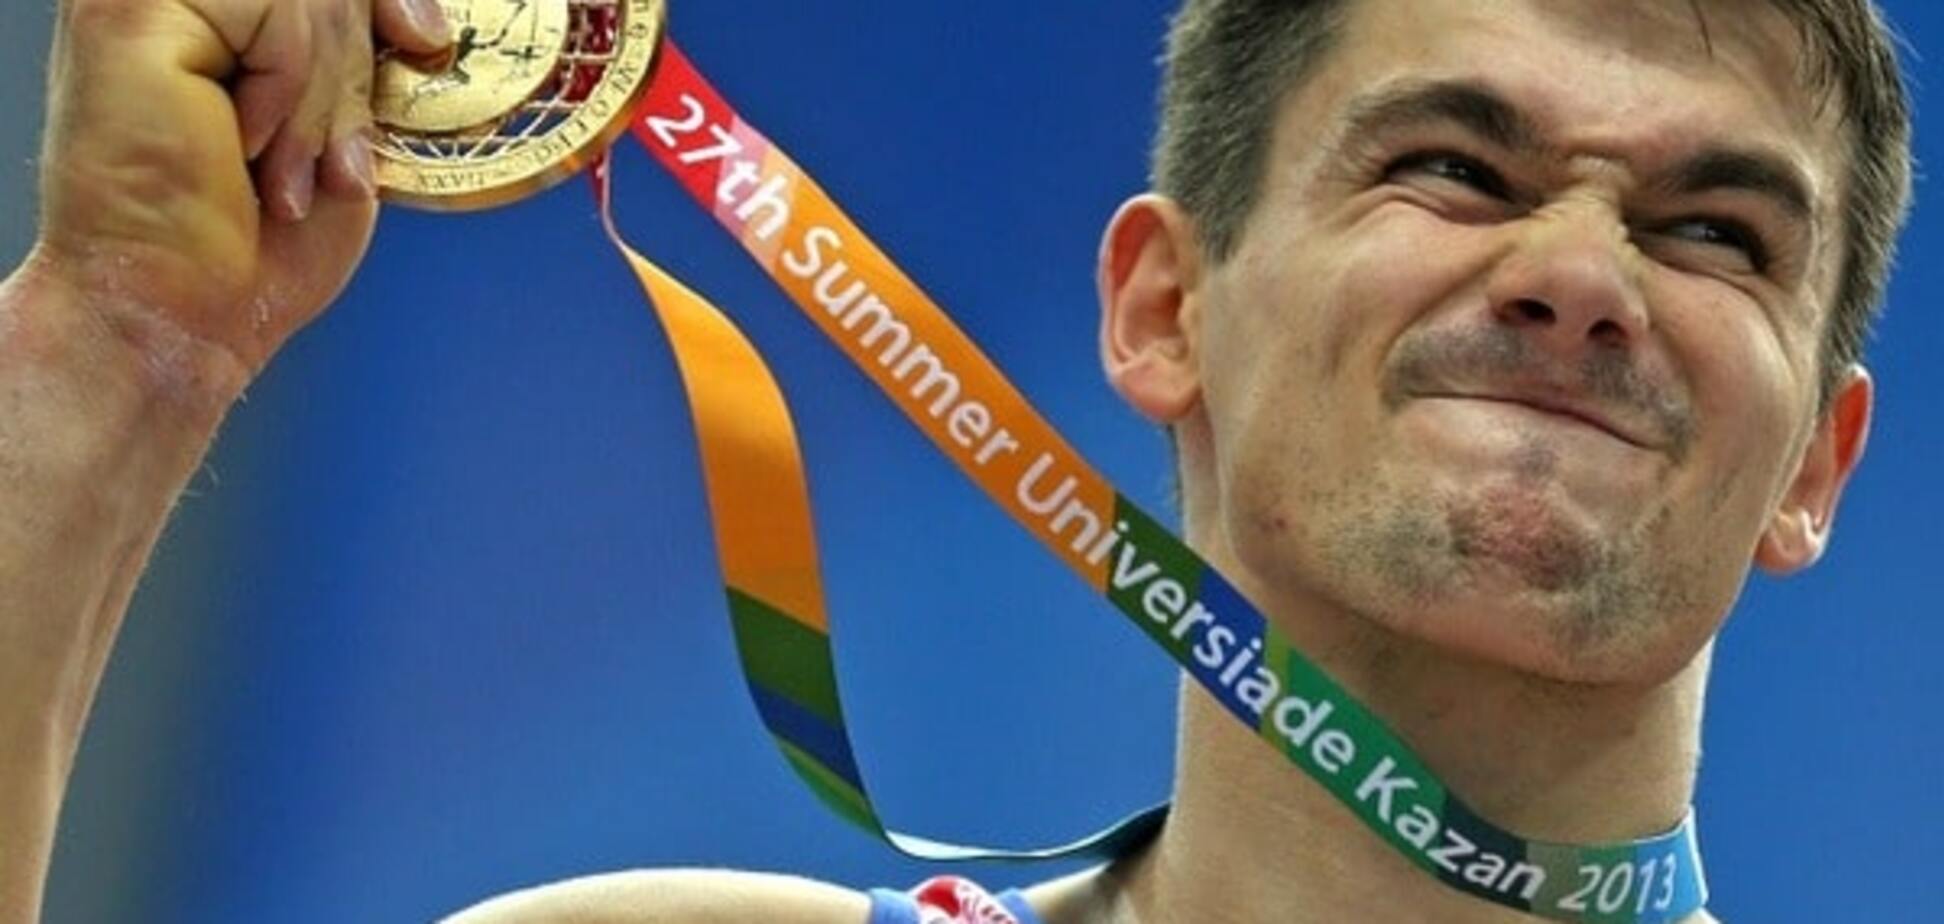 'Нагорода знайшла героя': український спортсмен, який прийняв громадянство Росії, попався на допінгу